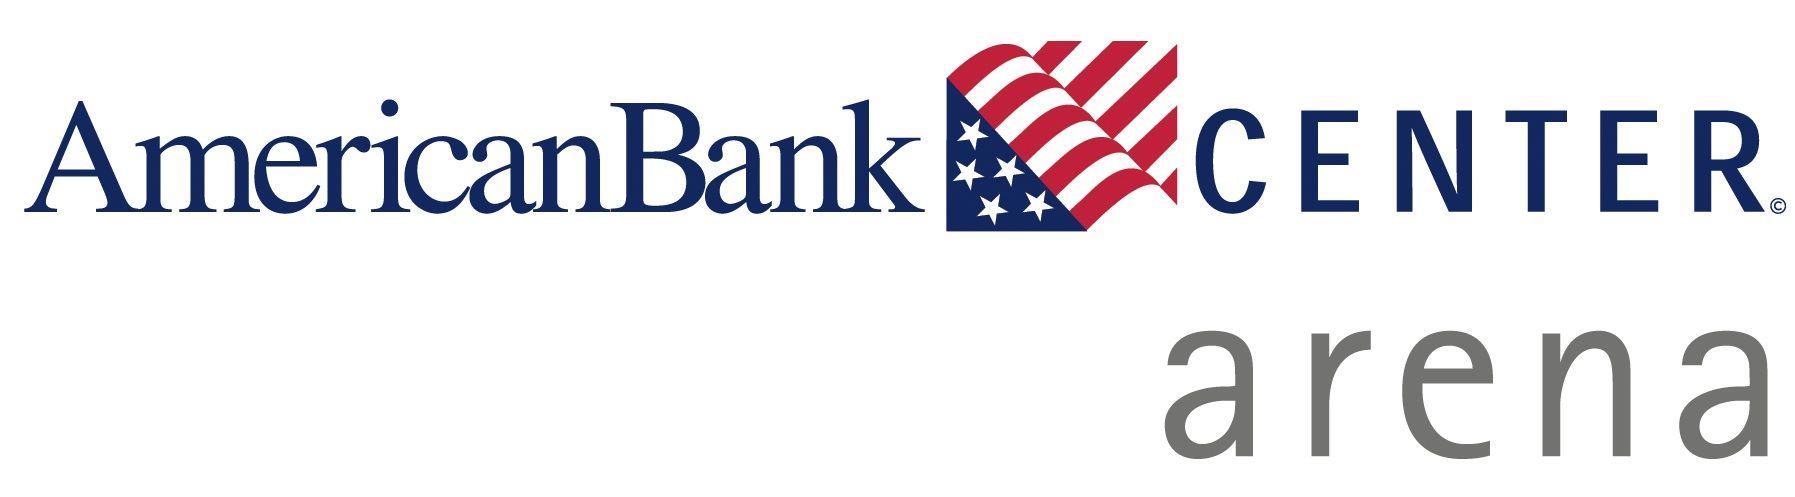 American Bank Logo - American bank center Logos